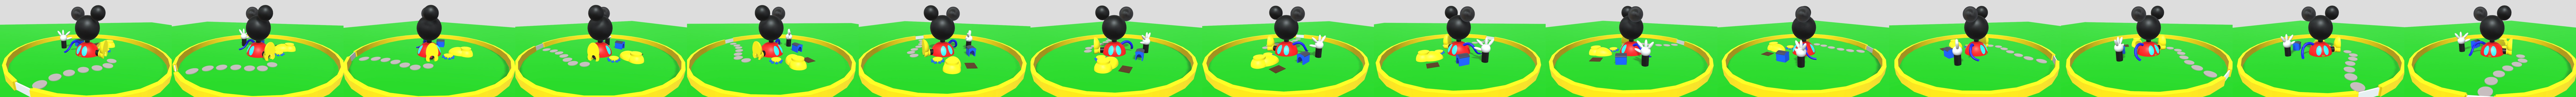 mickey mouse clubhouse (garren reload's version) - Download Free 3D model  by jovannichan2012 (@jovannichan2012) [51ba893]